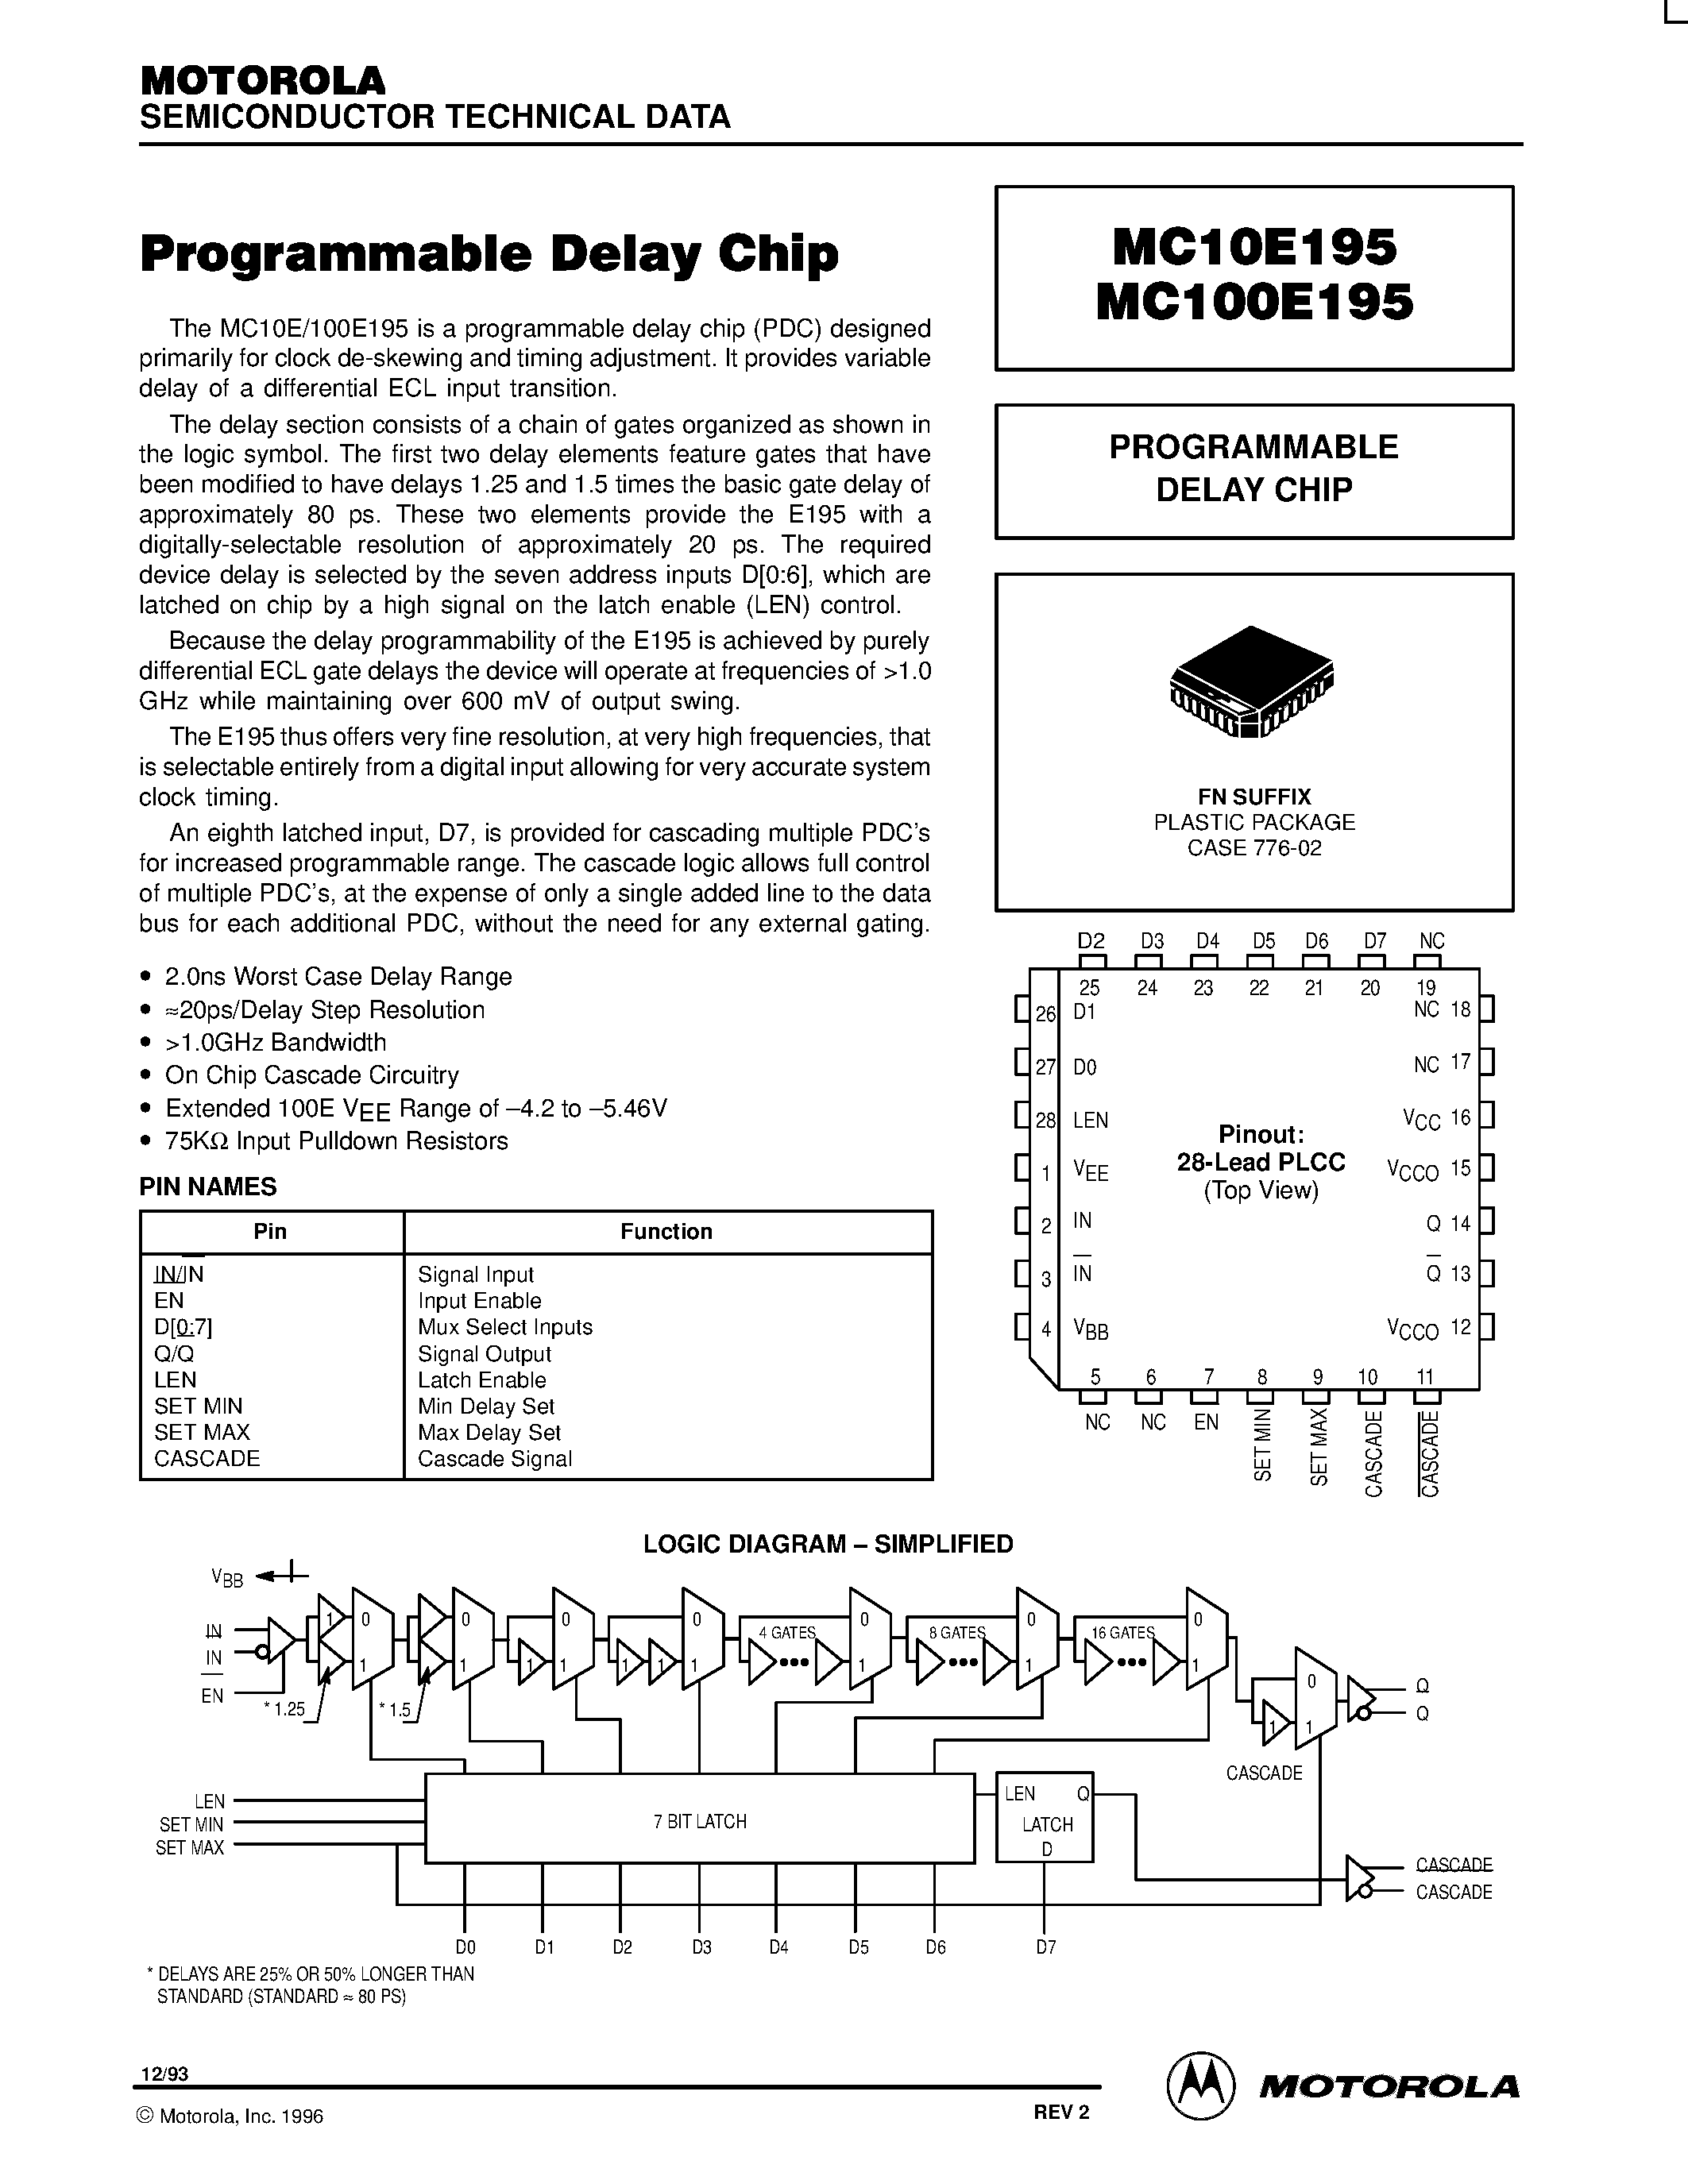 Datasheet MC100E195FN - PROGRAMMABLE DELAY CHIP page 1